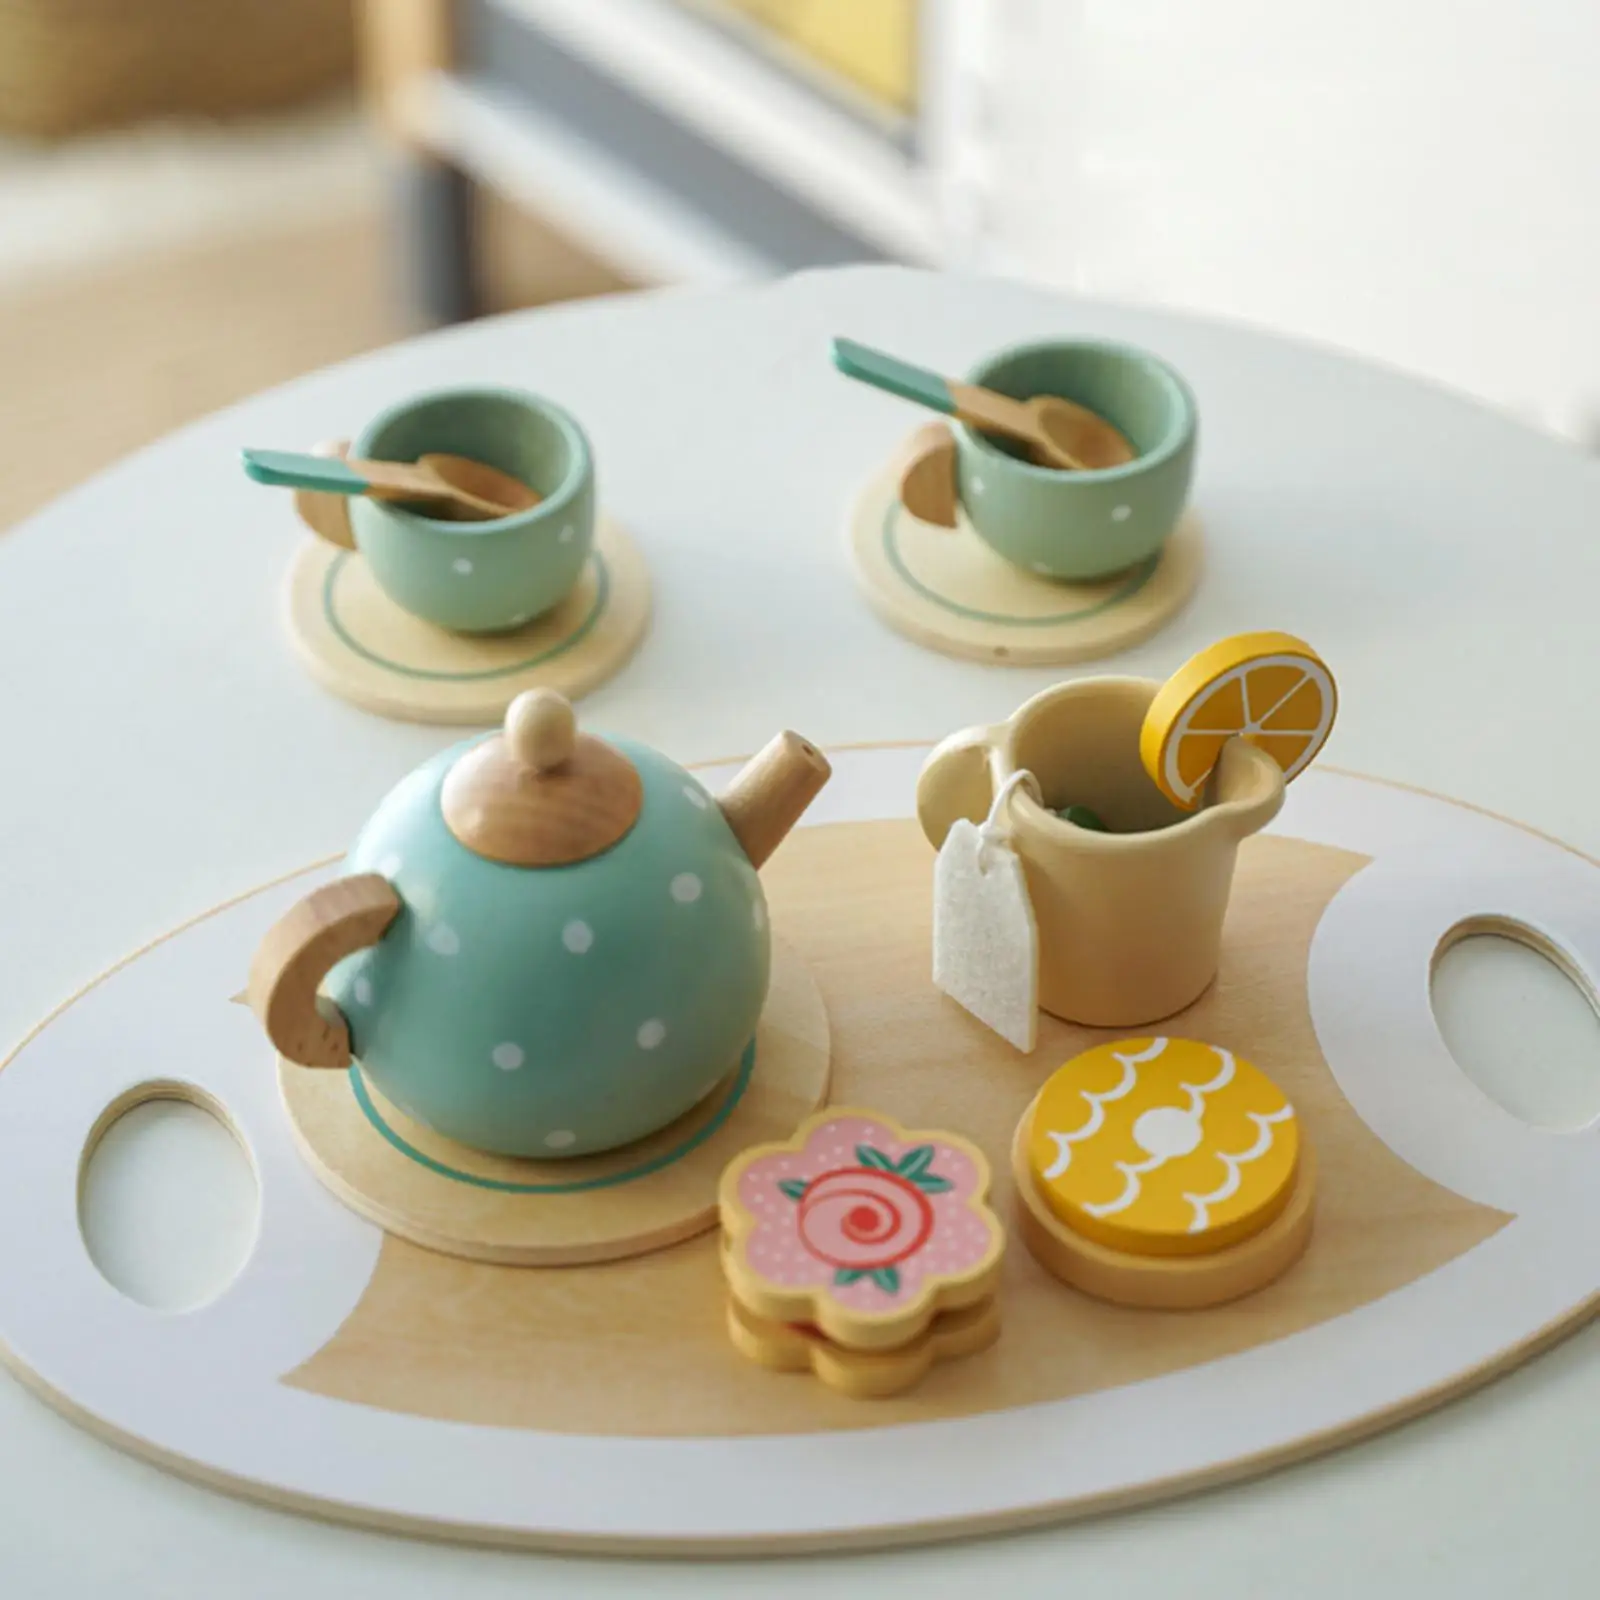 15Pcs Pretend Tea Party Mini Kitchen Kitchen Tableware Set for Preschool Kids Children Birthday Gift Ages 3 4 5 Years Old